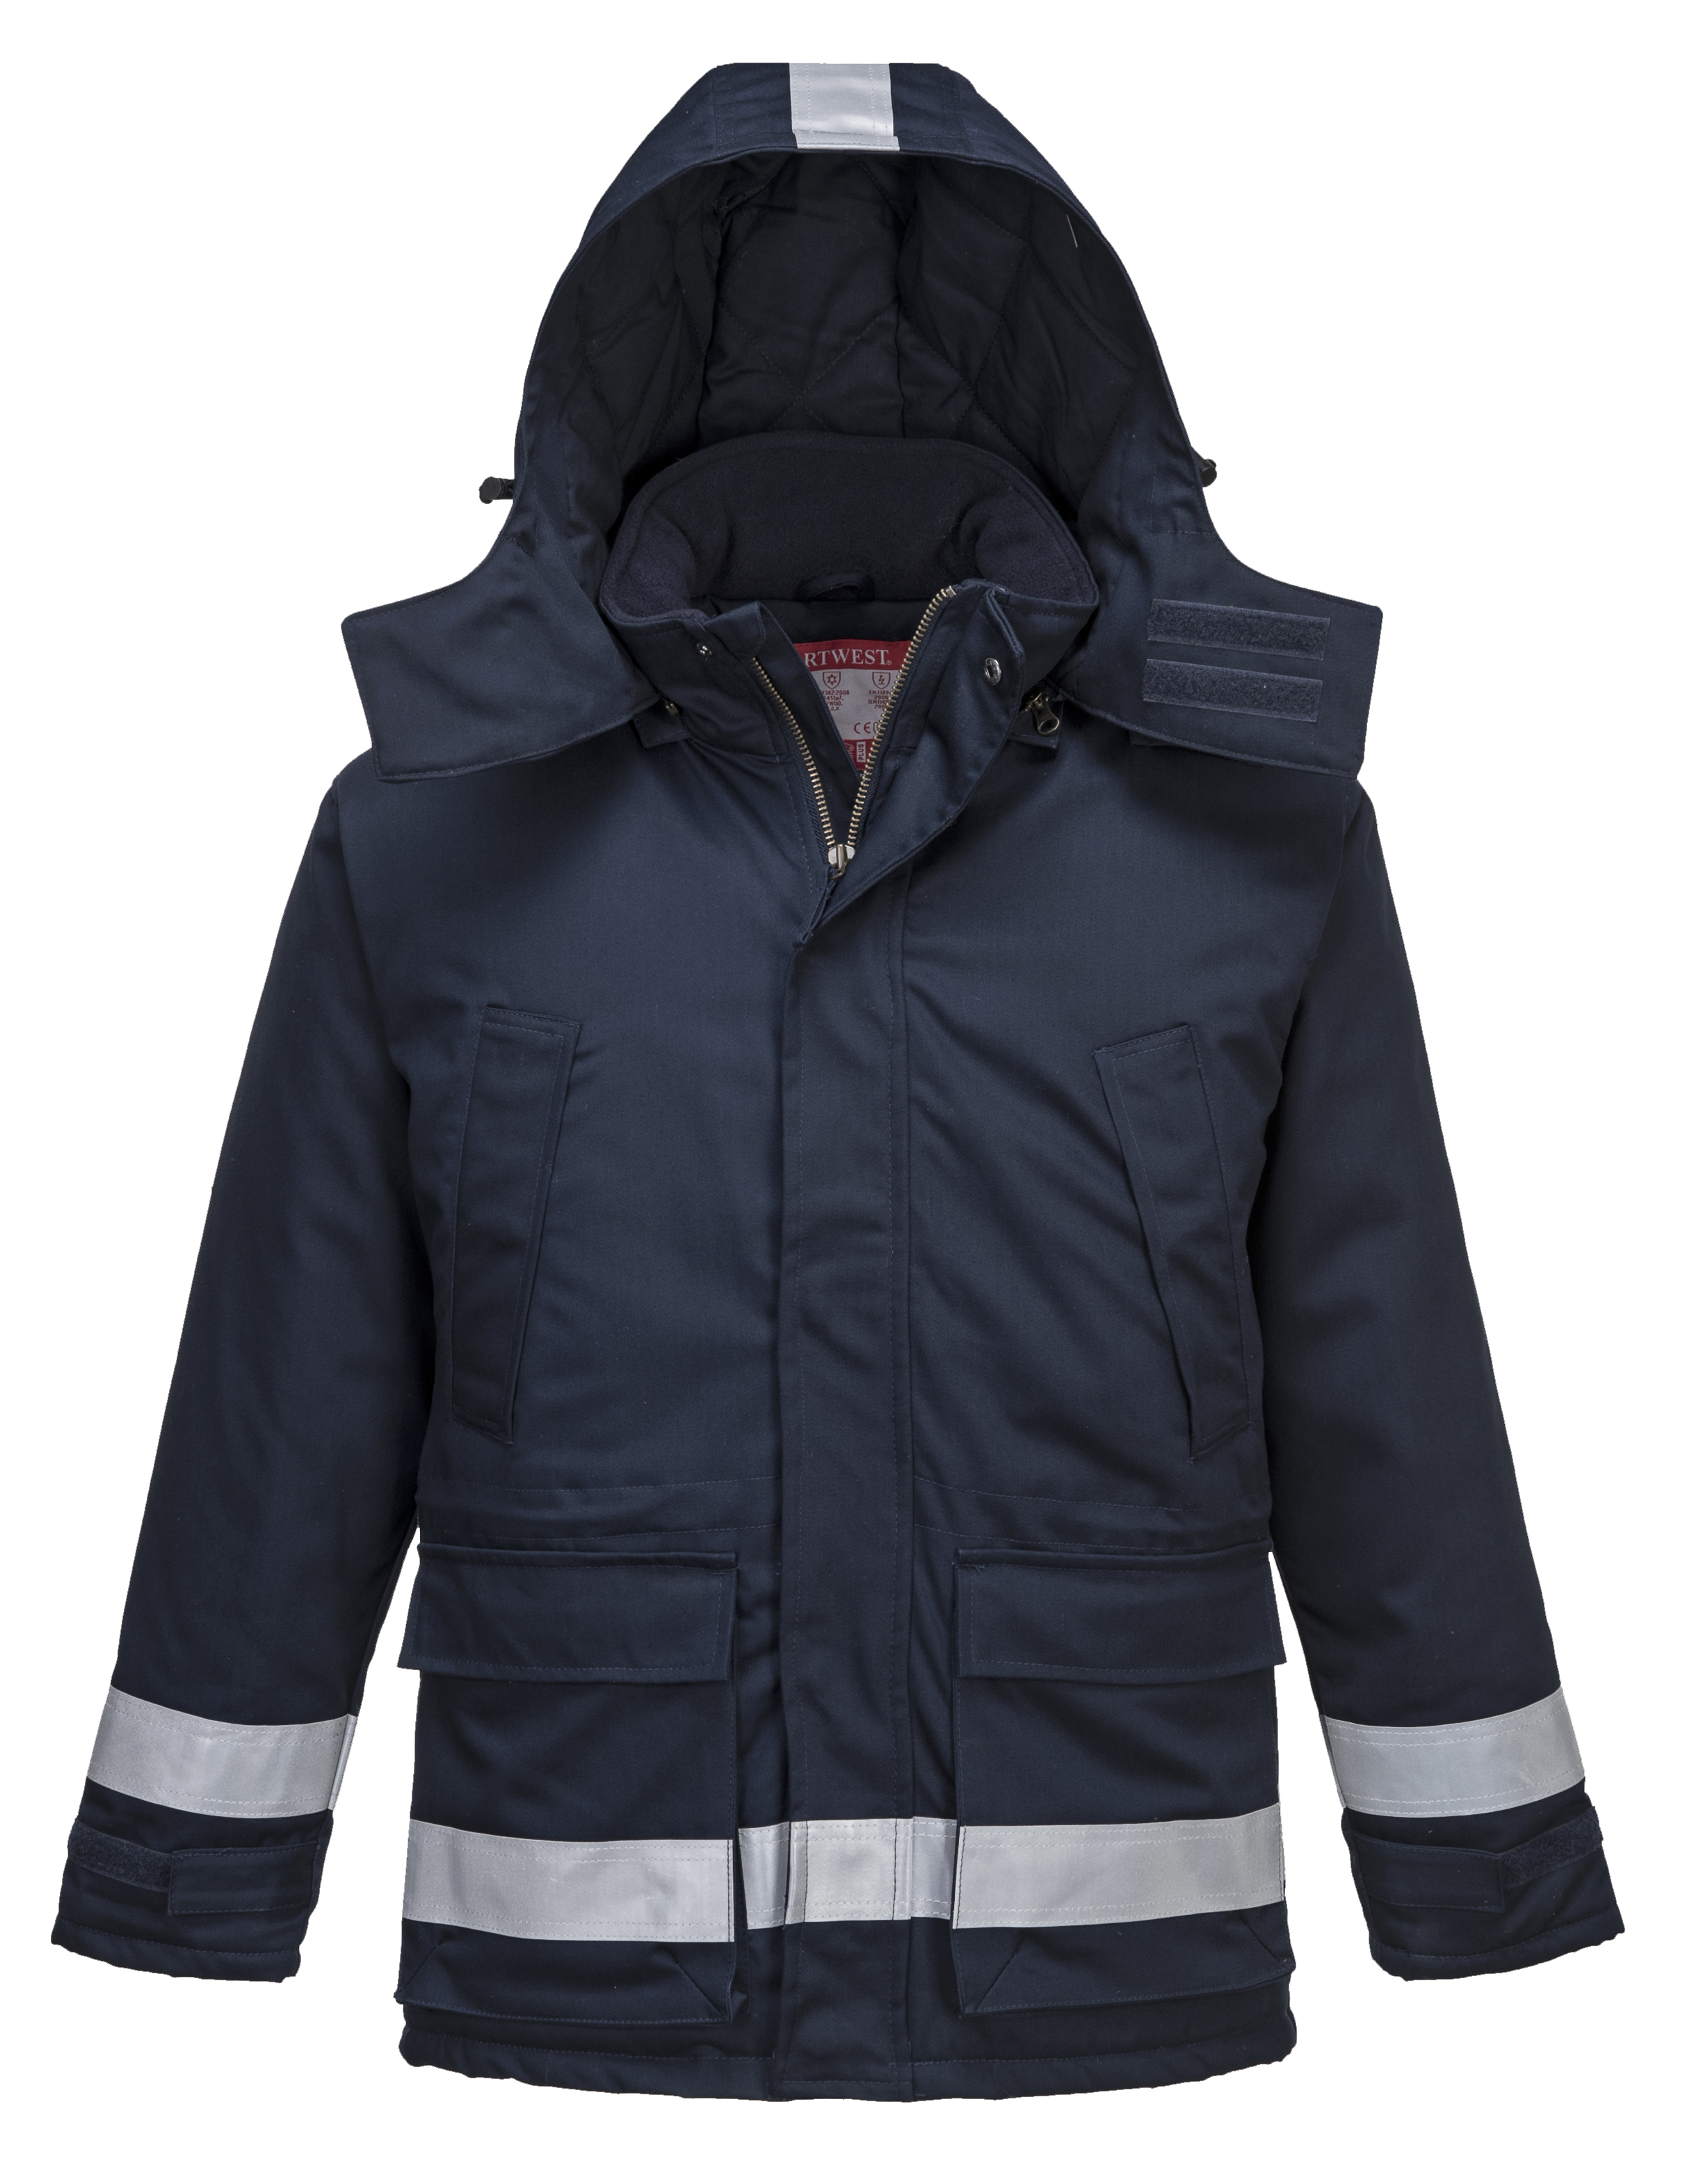 AF82 - Araflame bélelt téli kabát